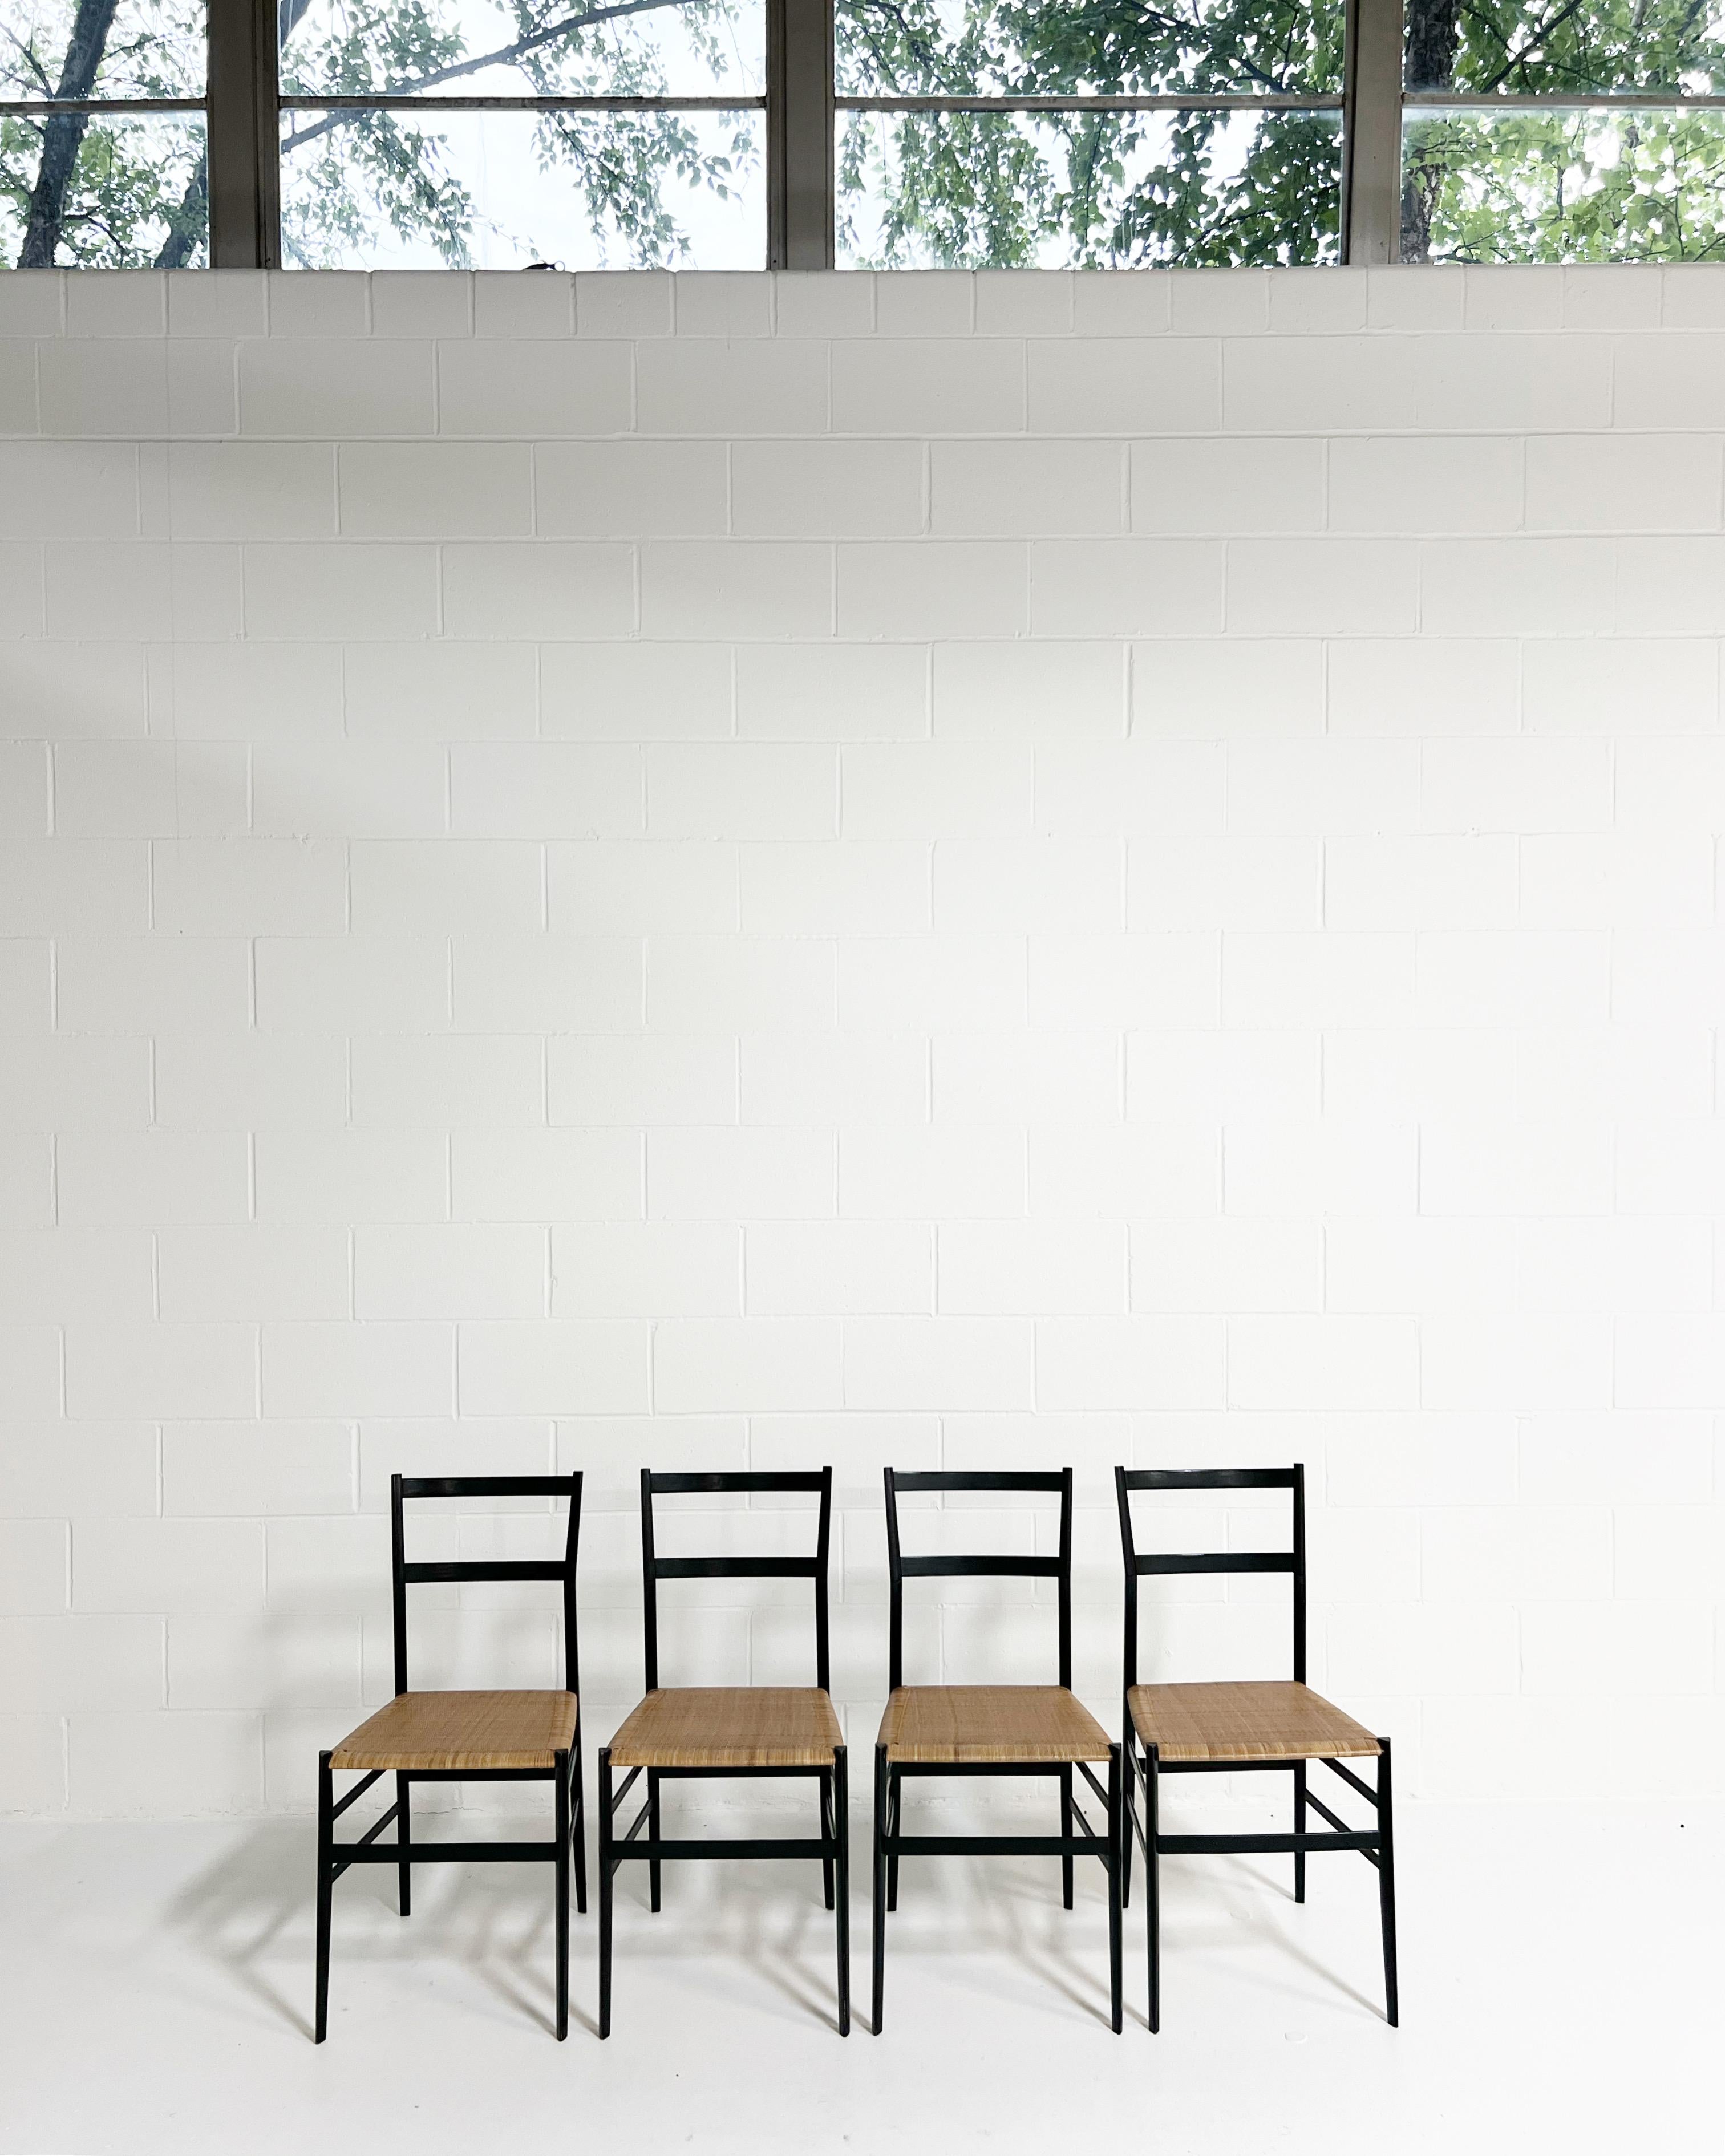 Gio Ponti
Superleggera dining chairs, set of 4

